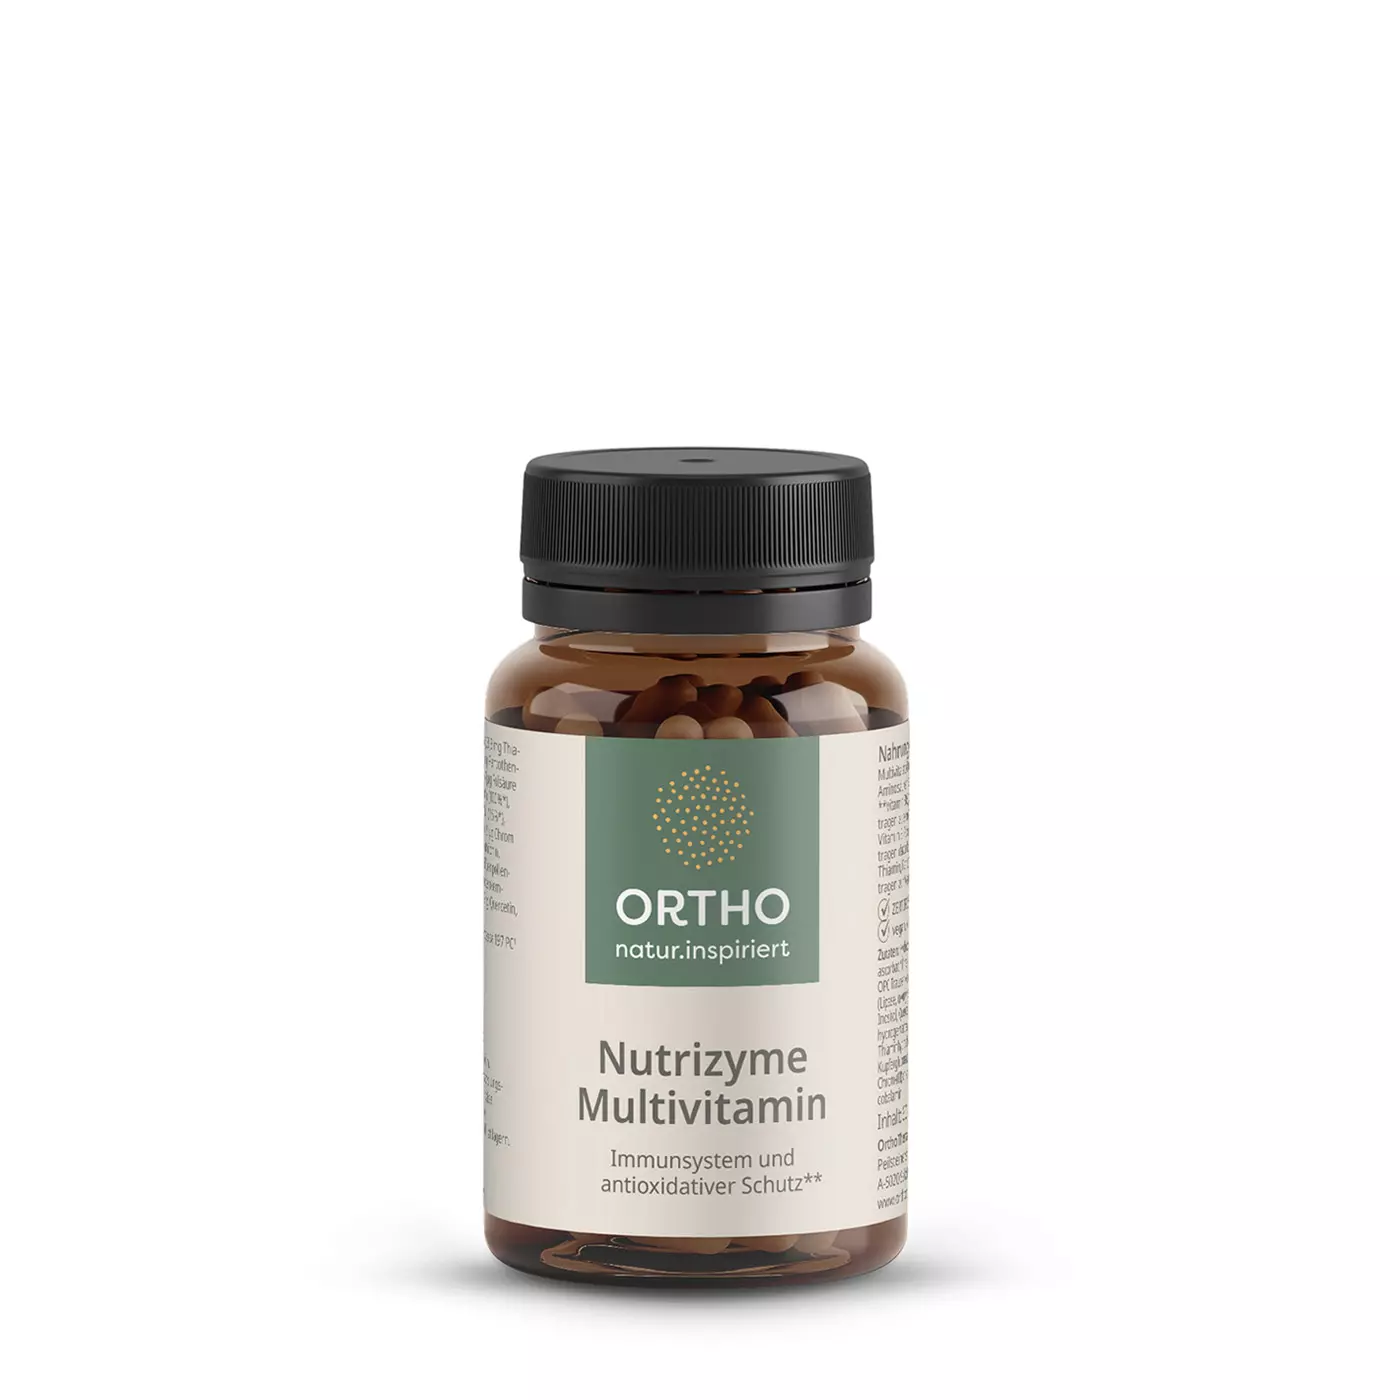 OrthoTherapia Nutrizyme Multivitamin